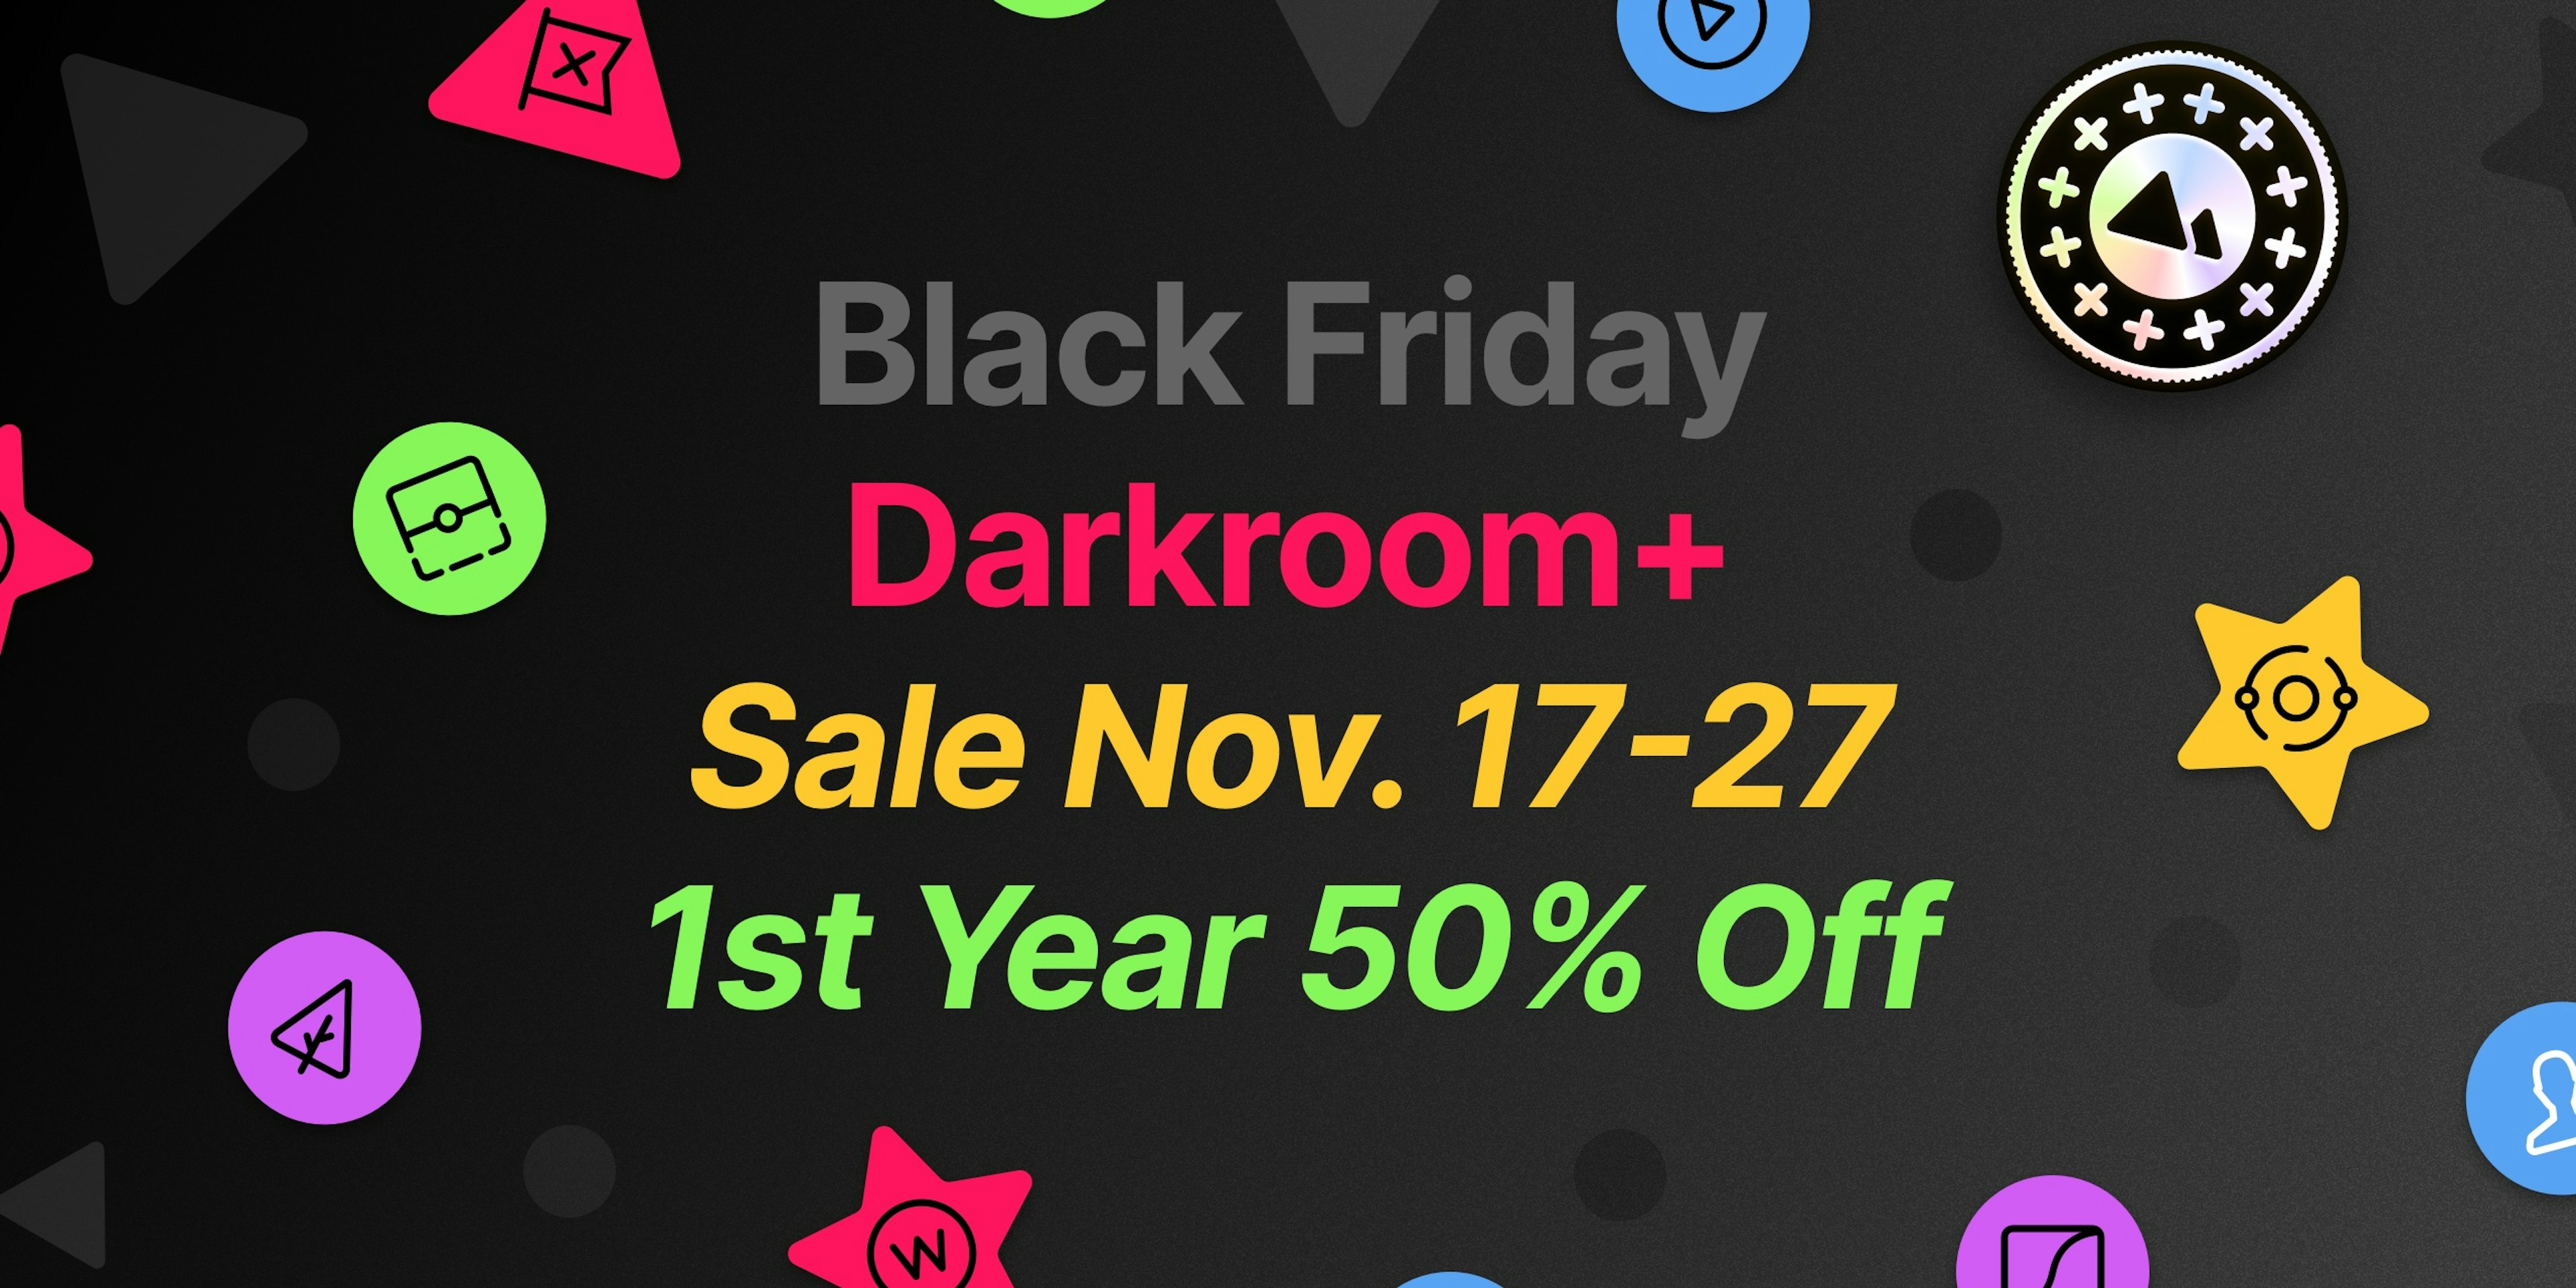 Cover Image for Black Friday Week Darkroom+ Sale